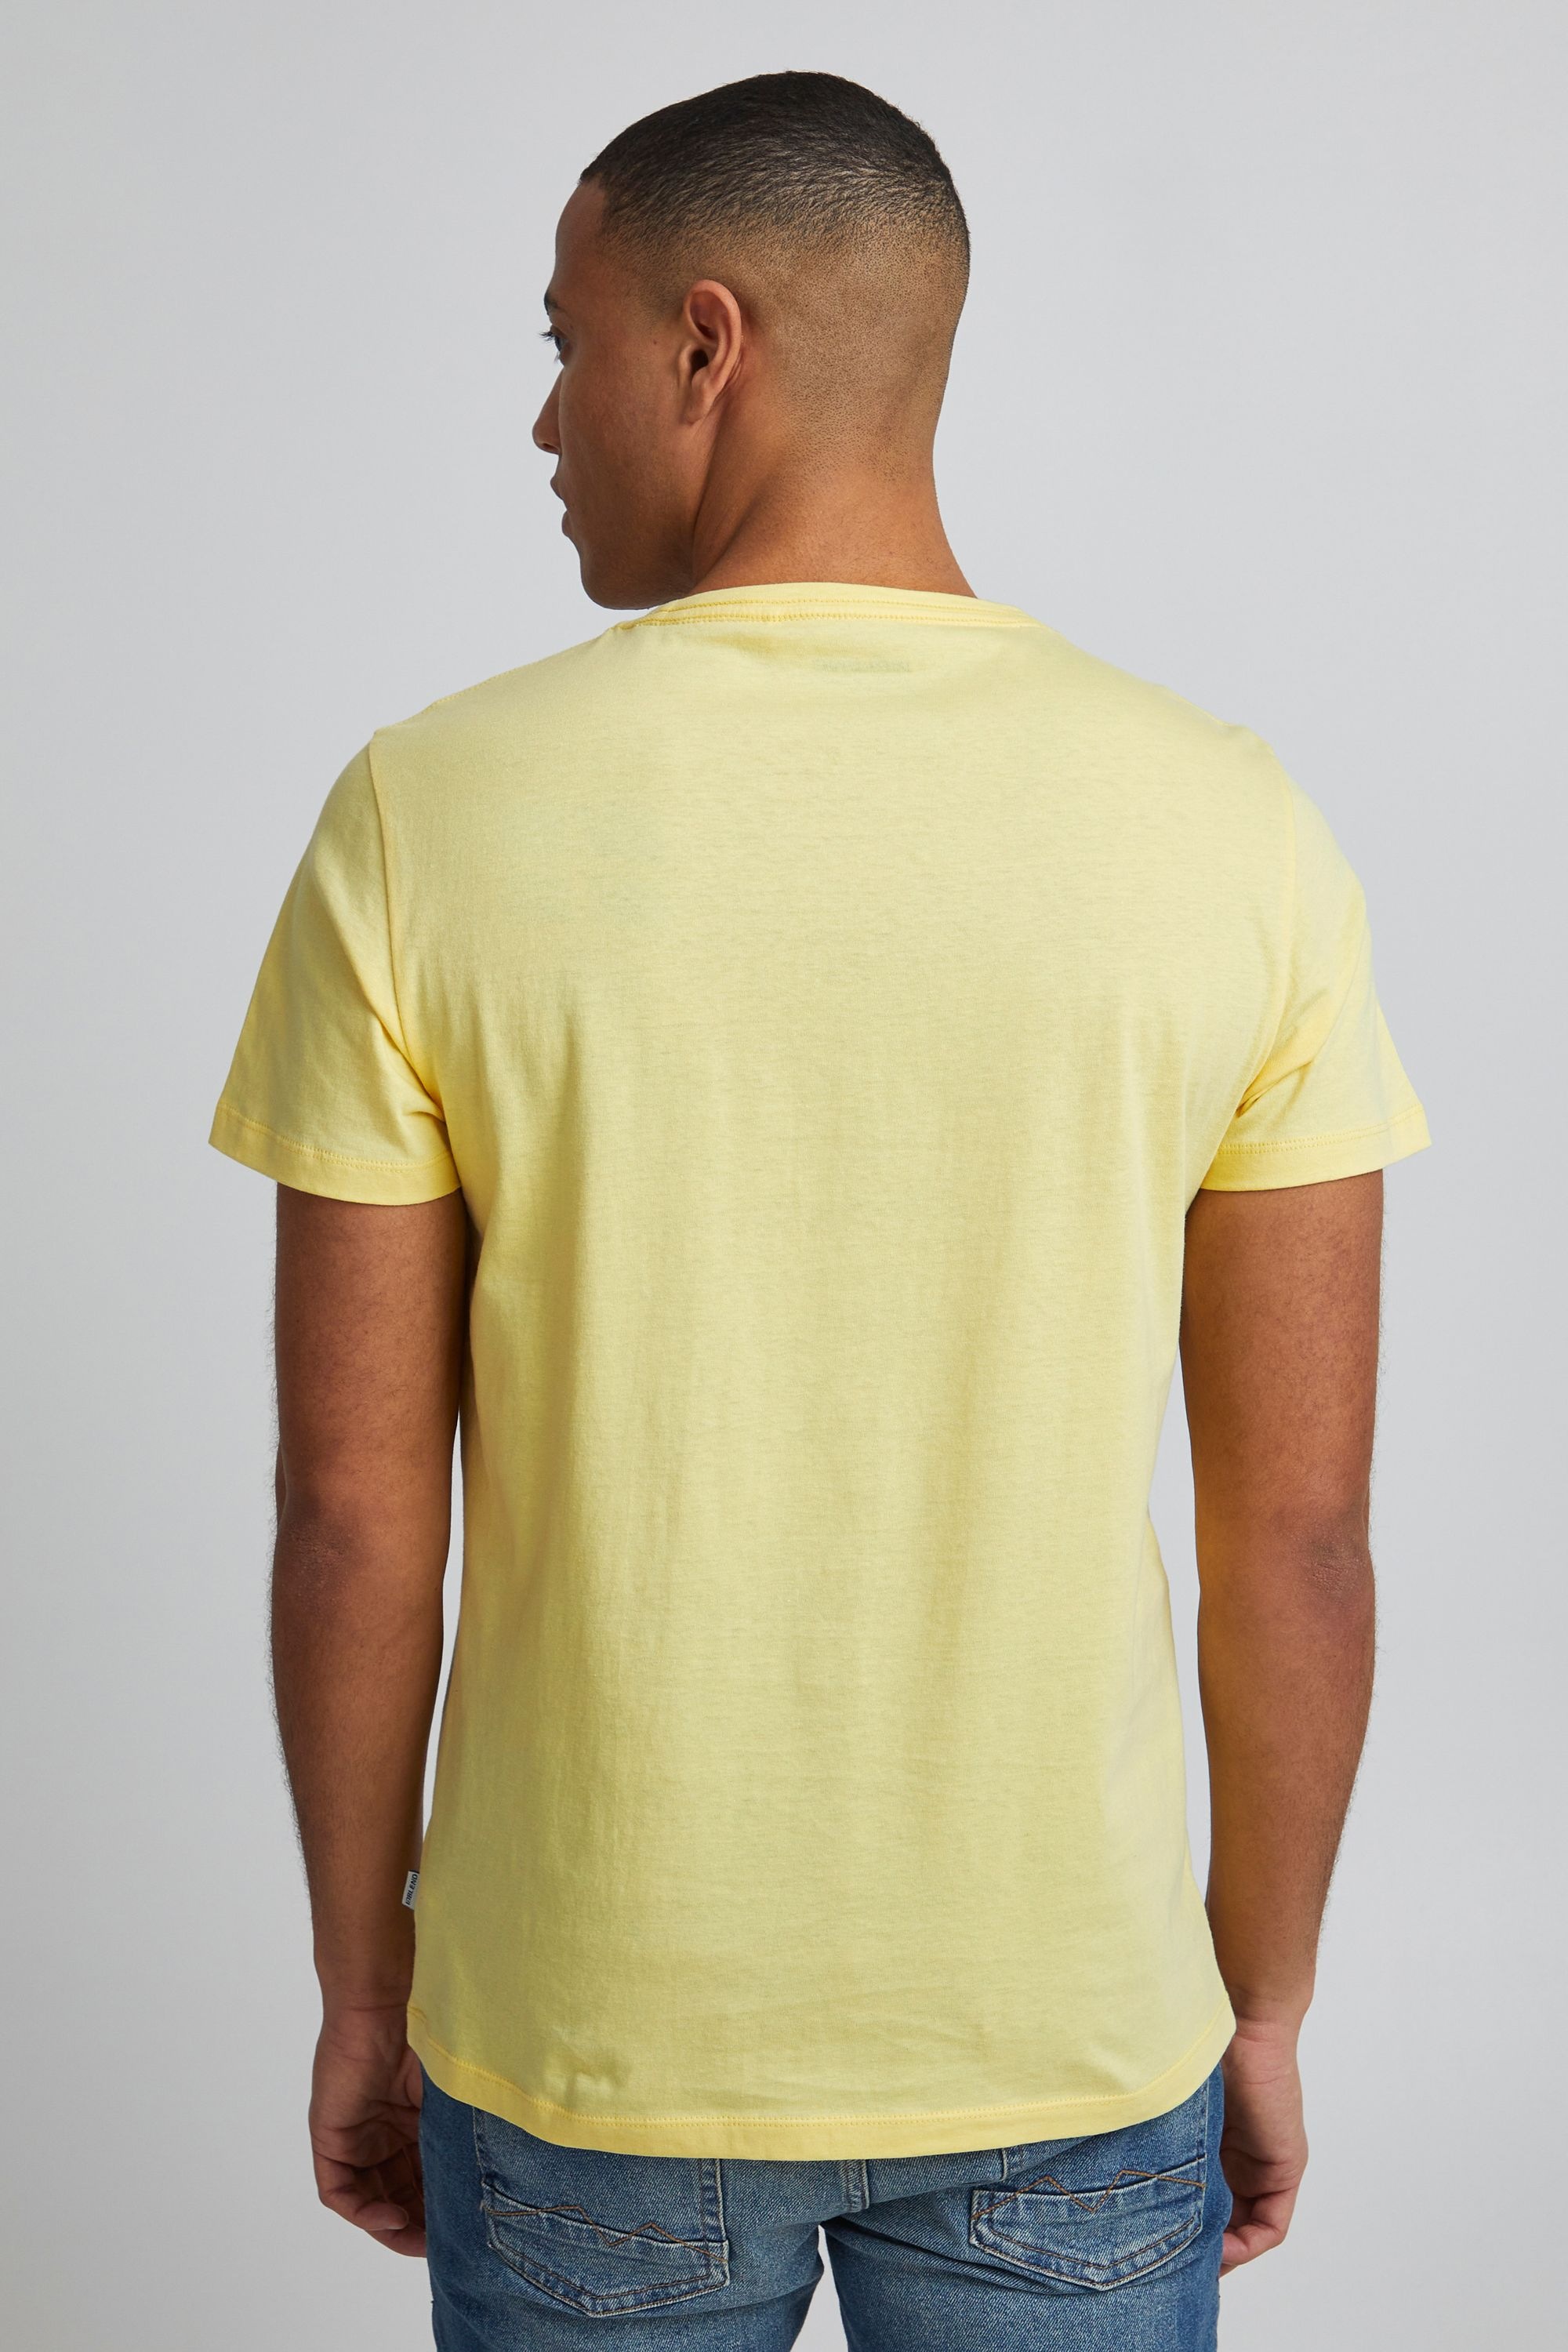 Blend T-Shirt »BLEND BHCamillo - 20714407 ME«